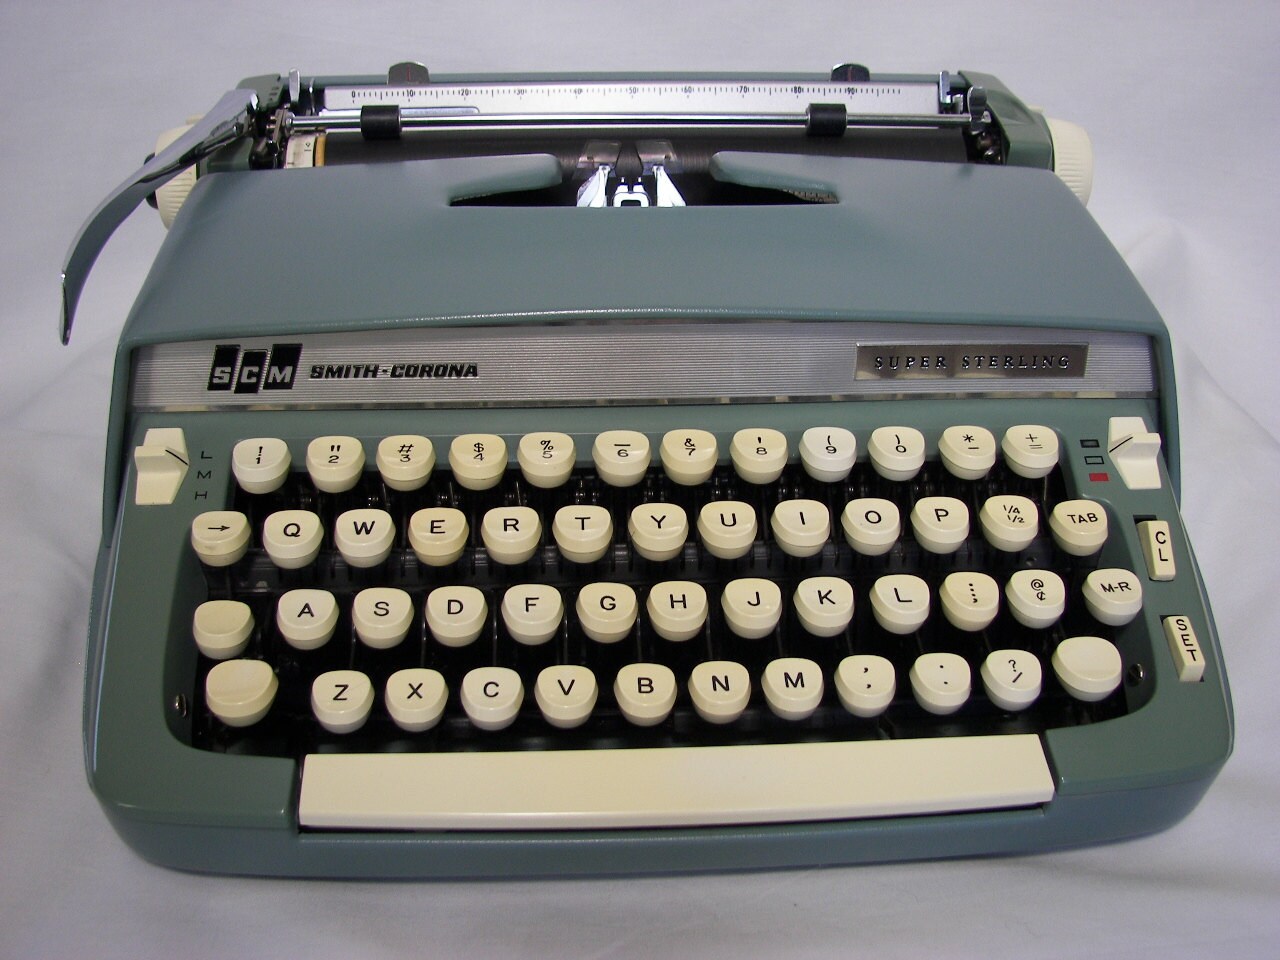 Smith-Corona Super Sterling Typewriter 1960s Turquoise